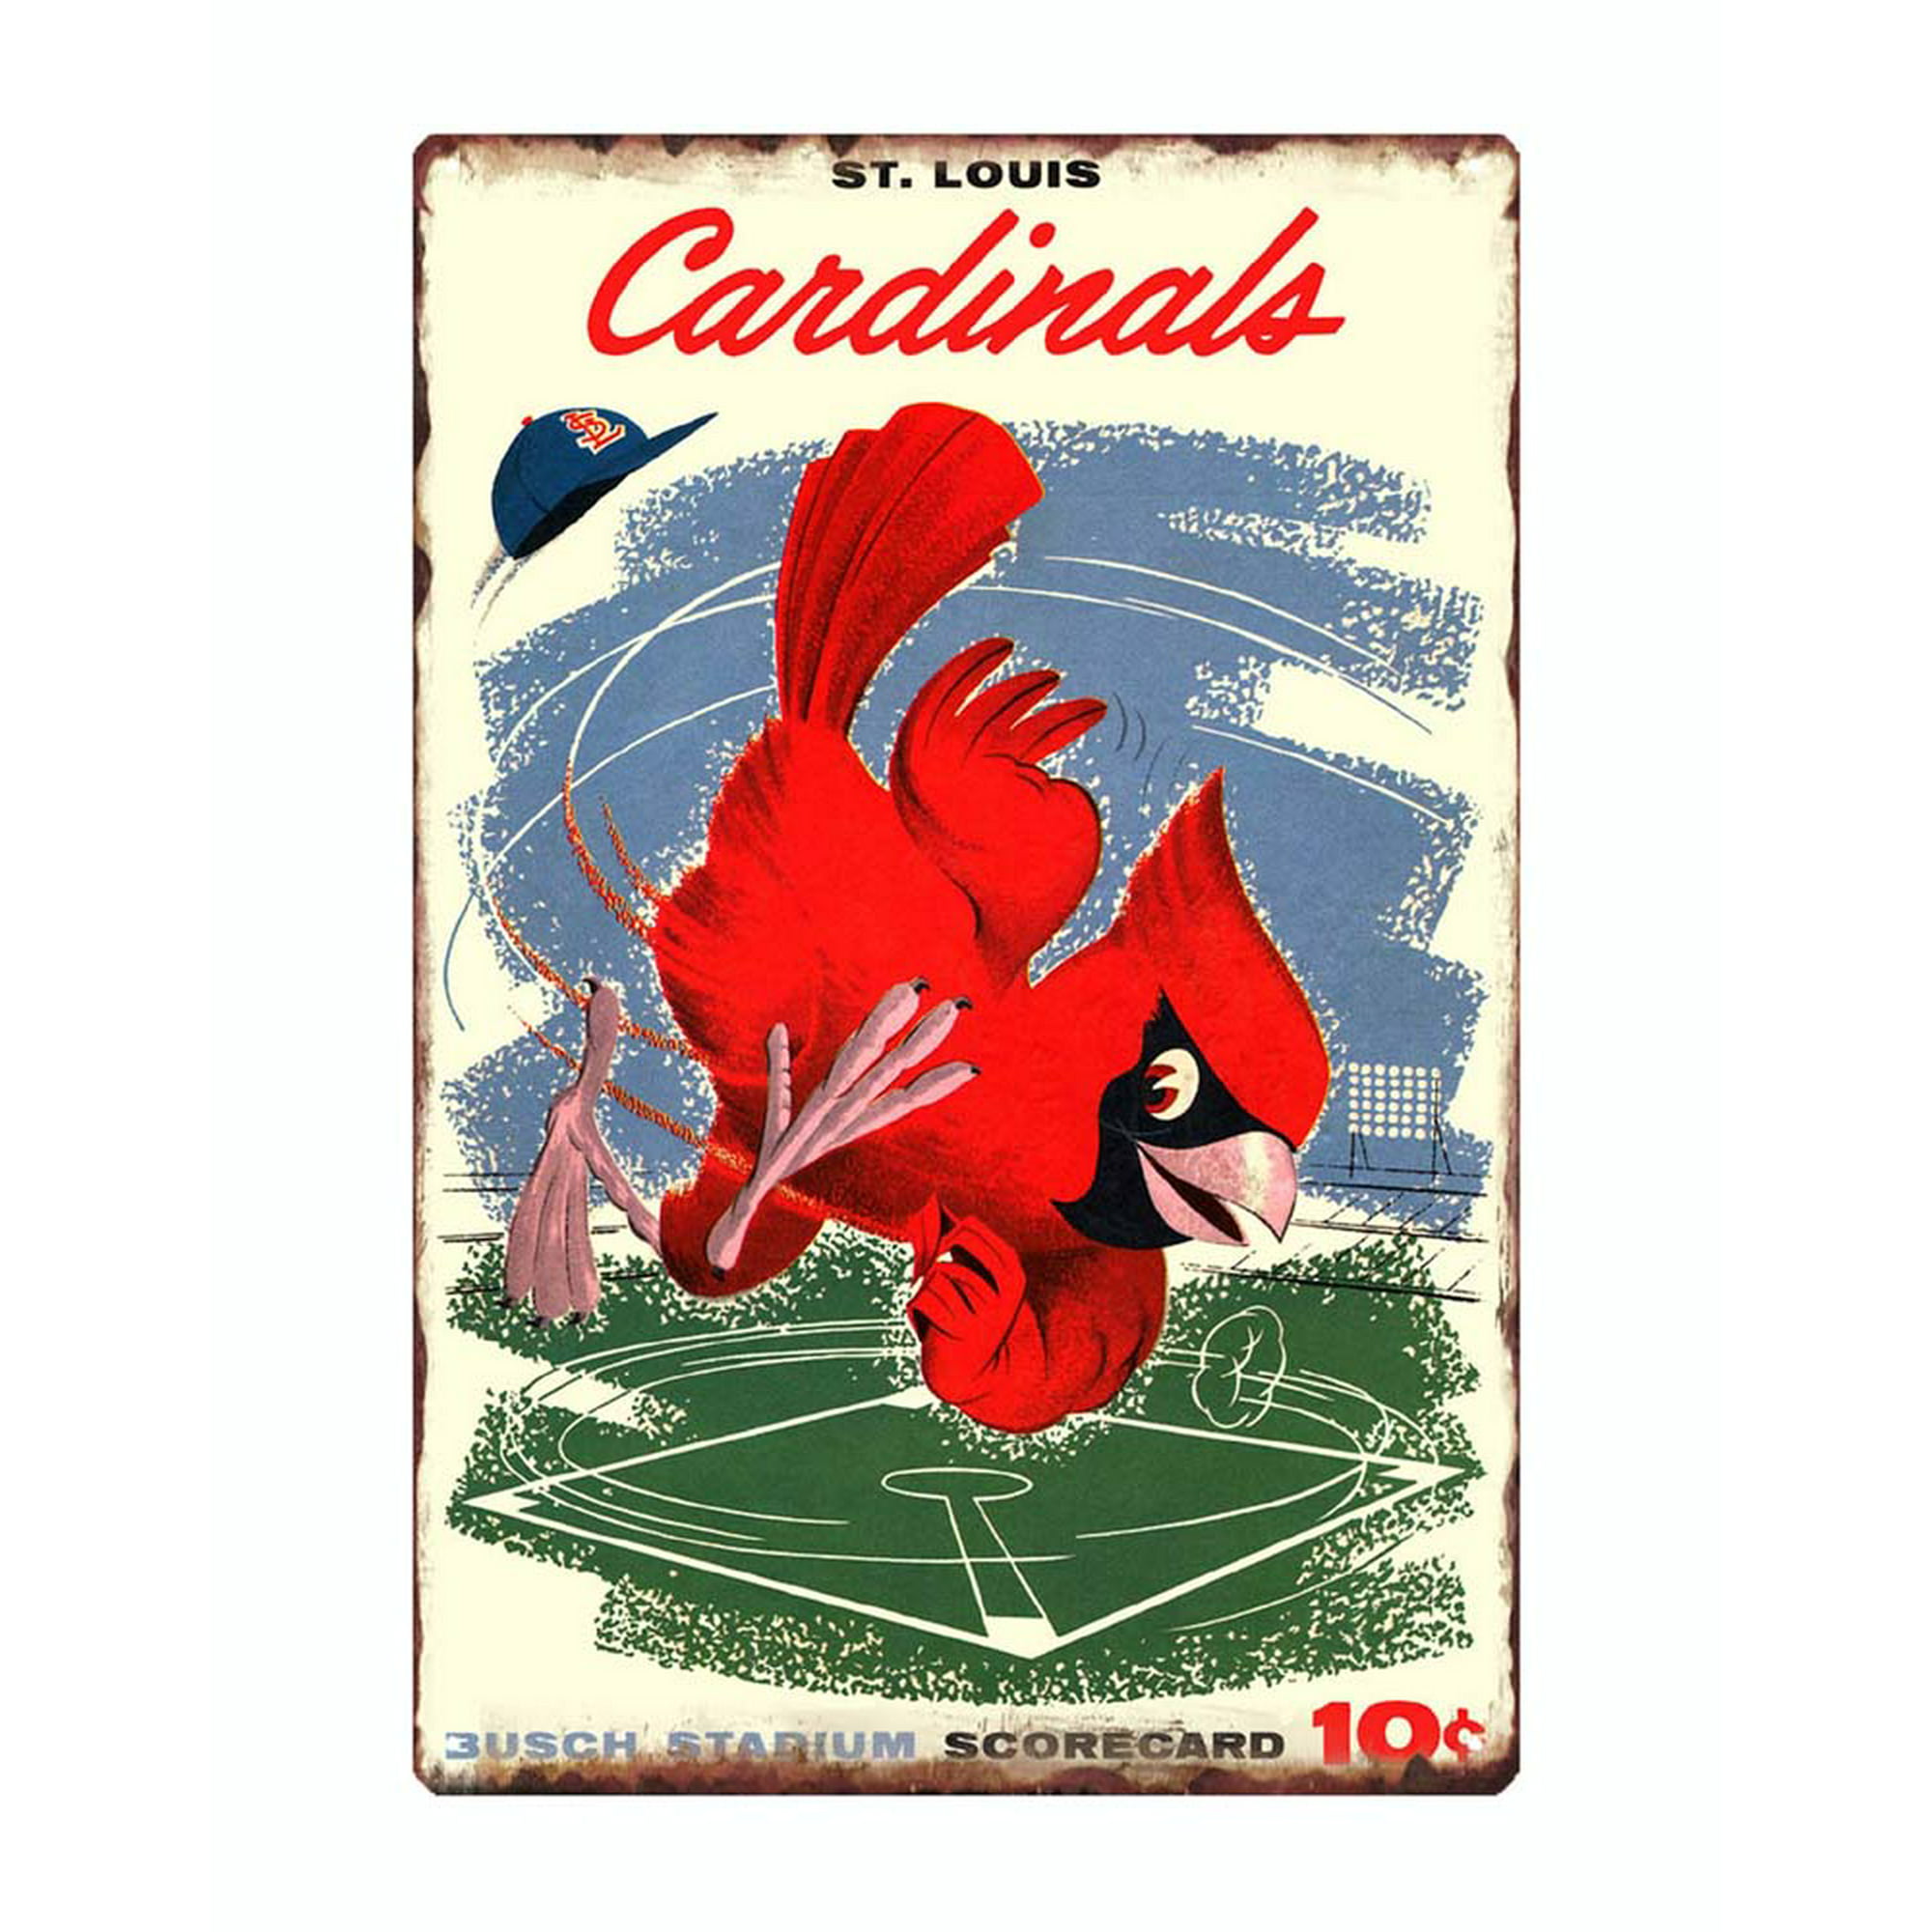 1958 St. Louis Cardinals Scorecard Busch Stadium metal tin sign